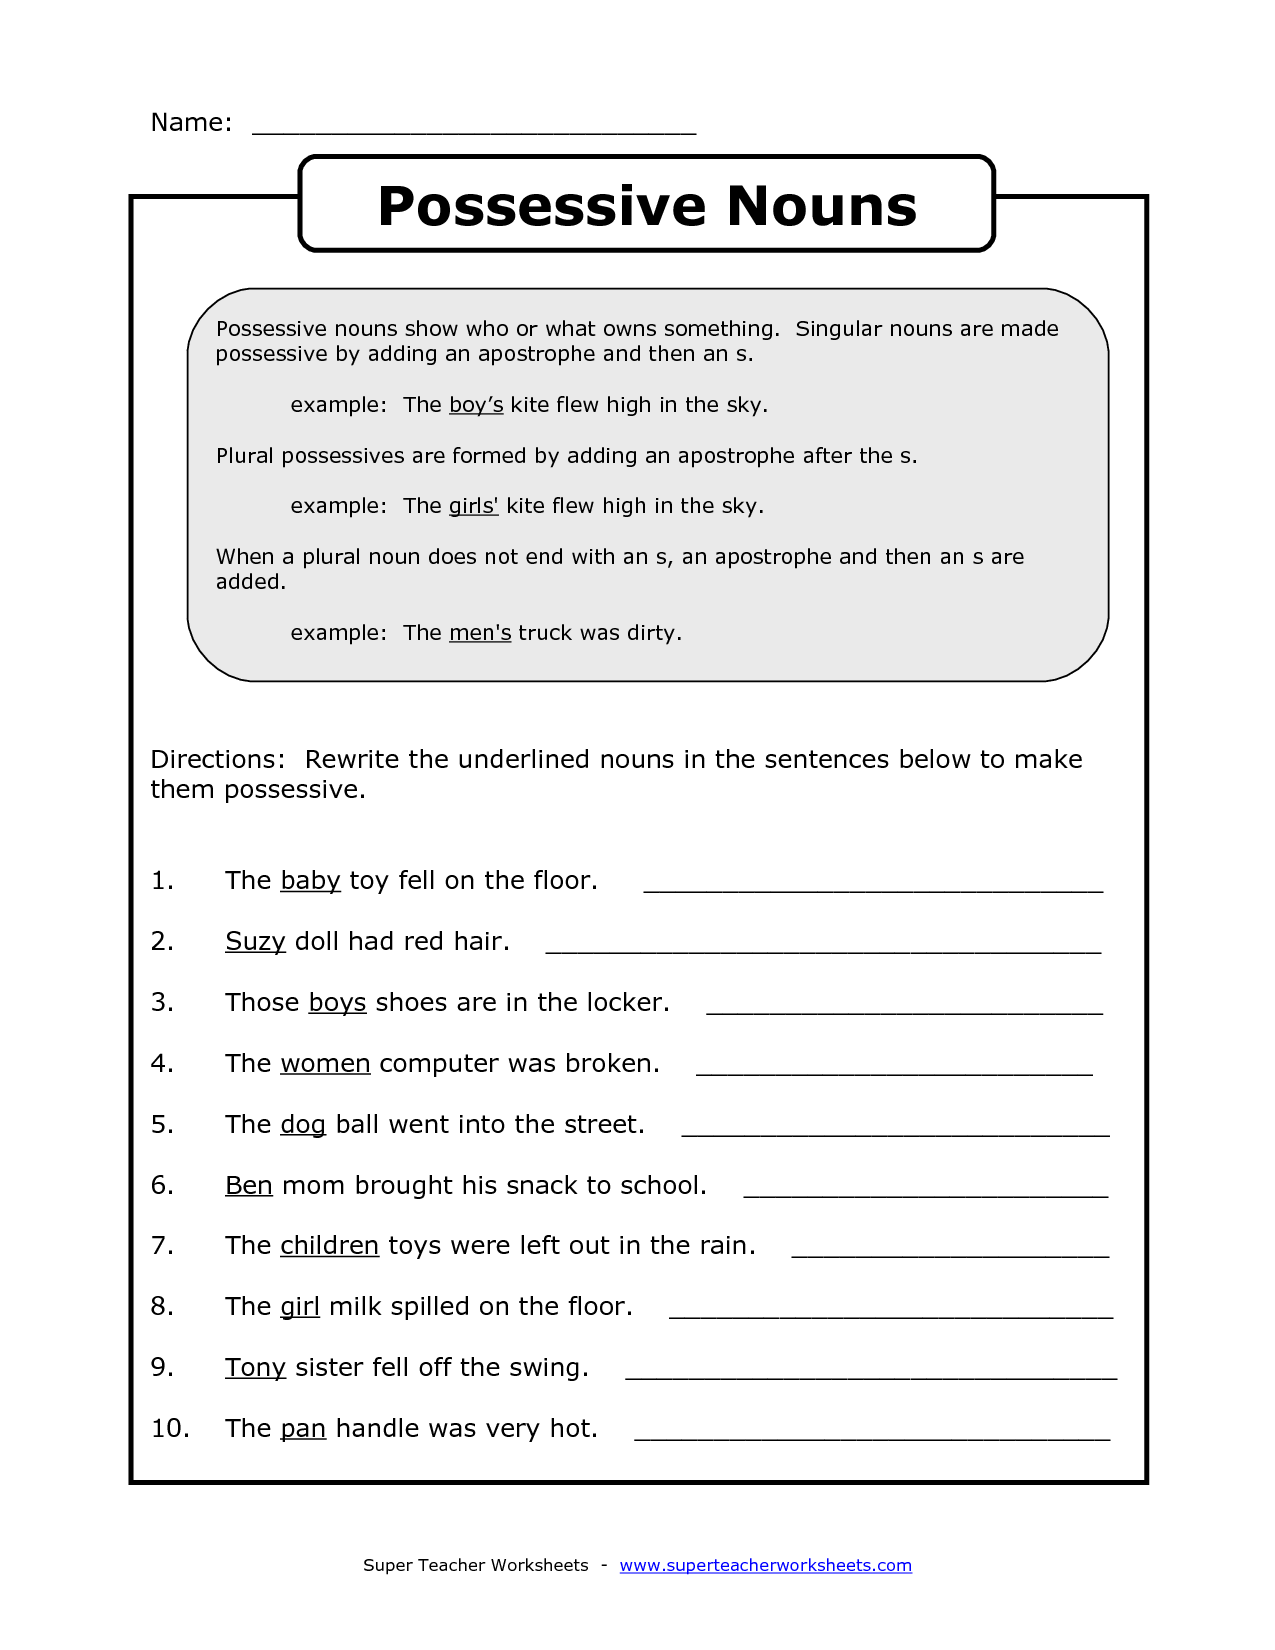 Possessive Nouns Worksheet Pdf 6th Grade